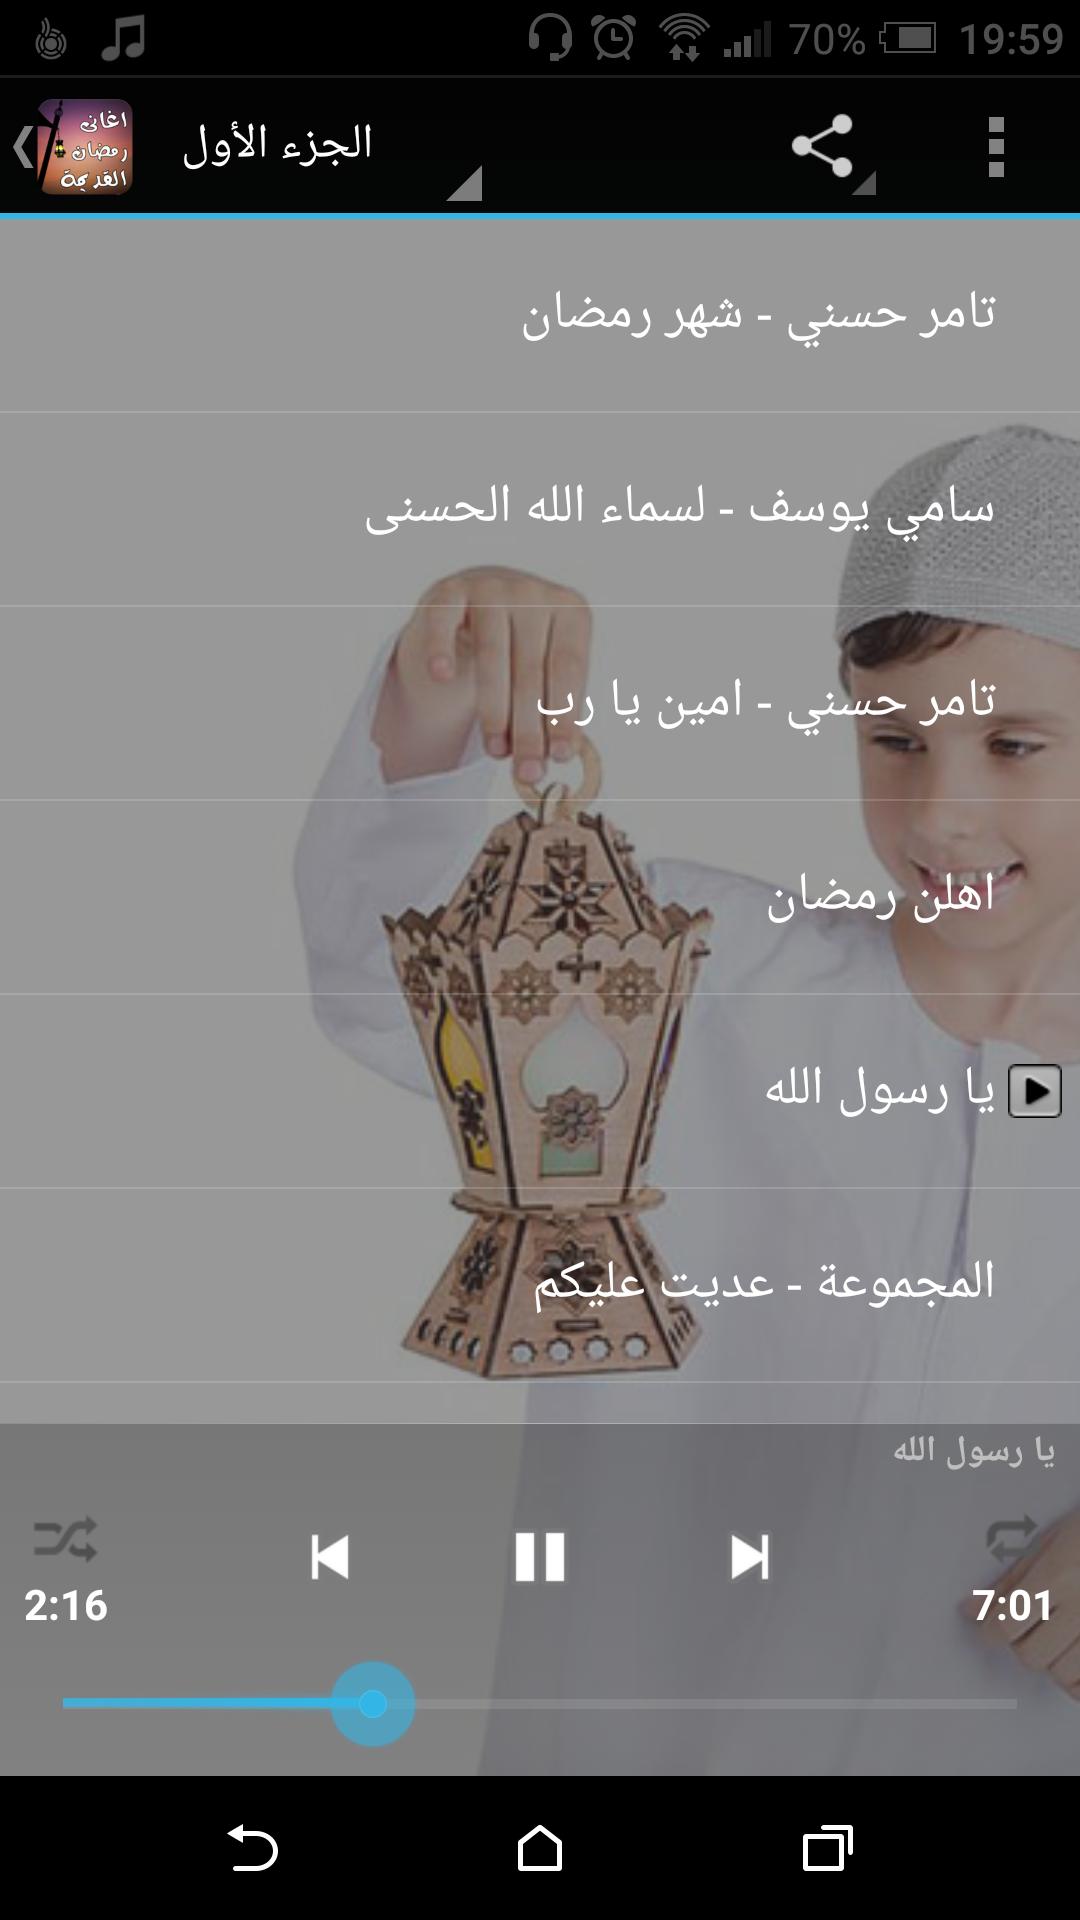 اغانى رمضان القديمة بدون نت for Android - APK Download